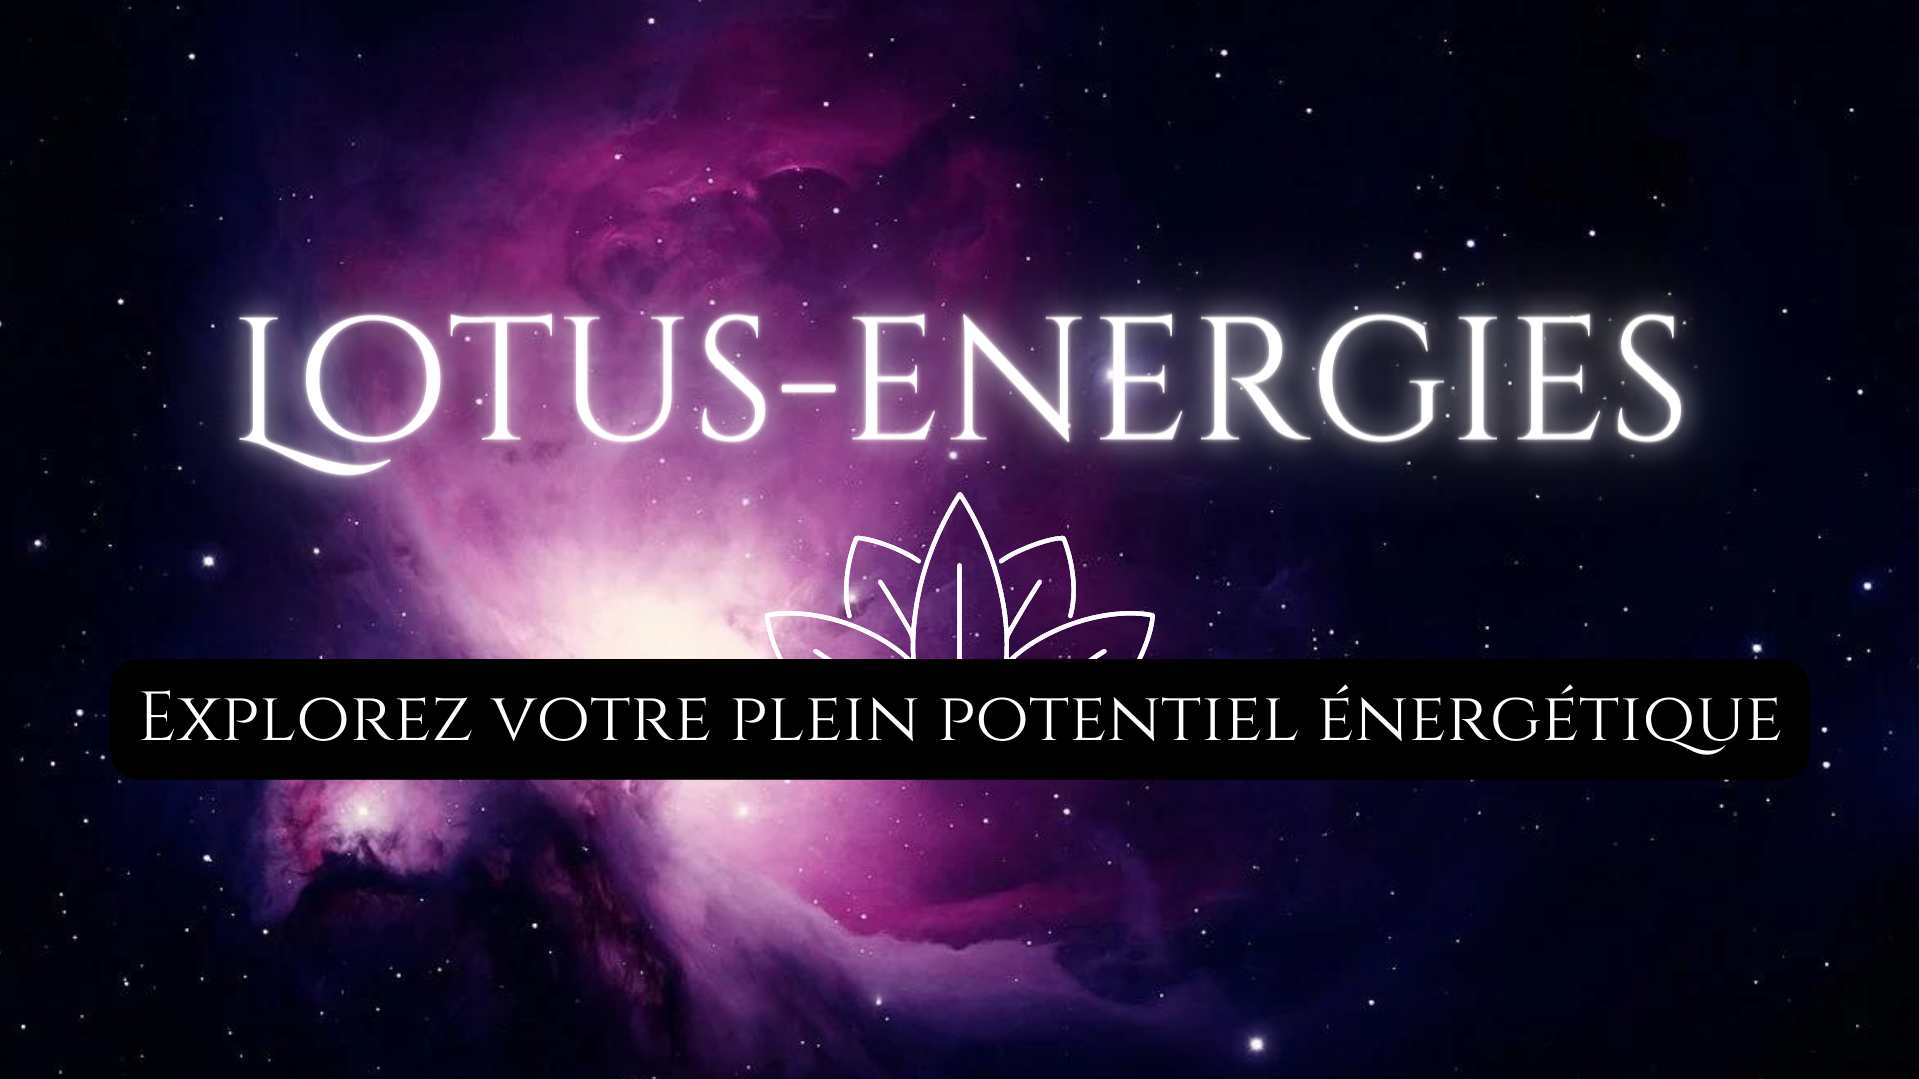 Lotus energies